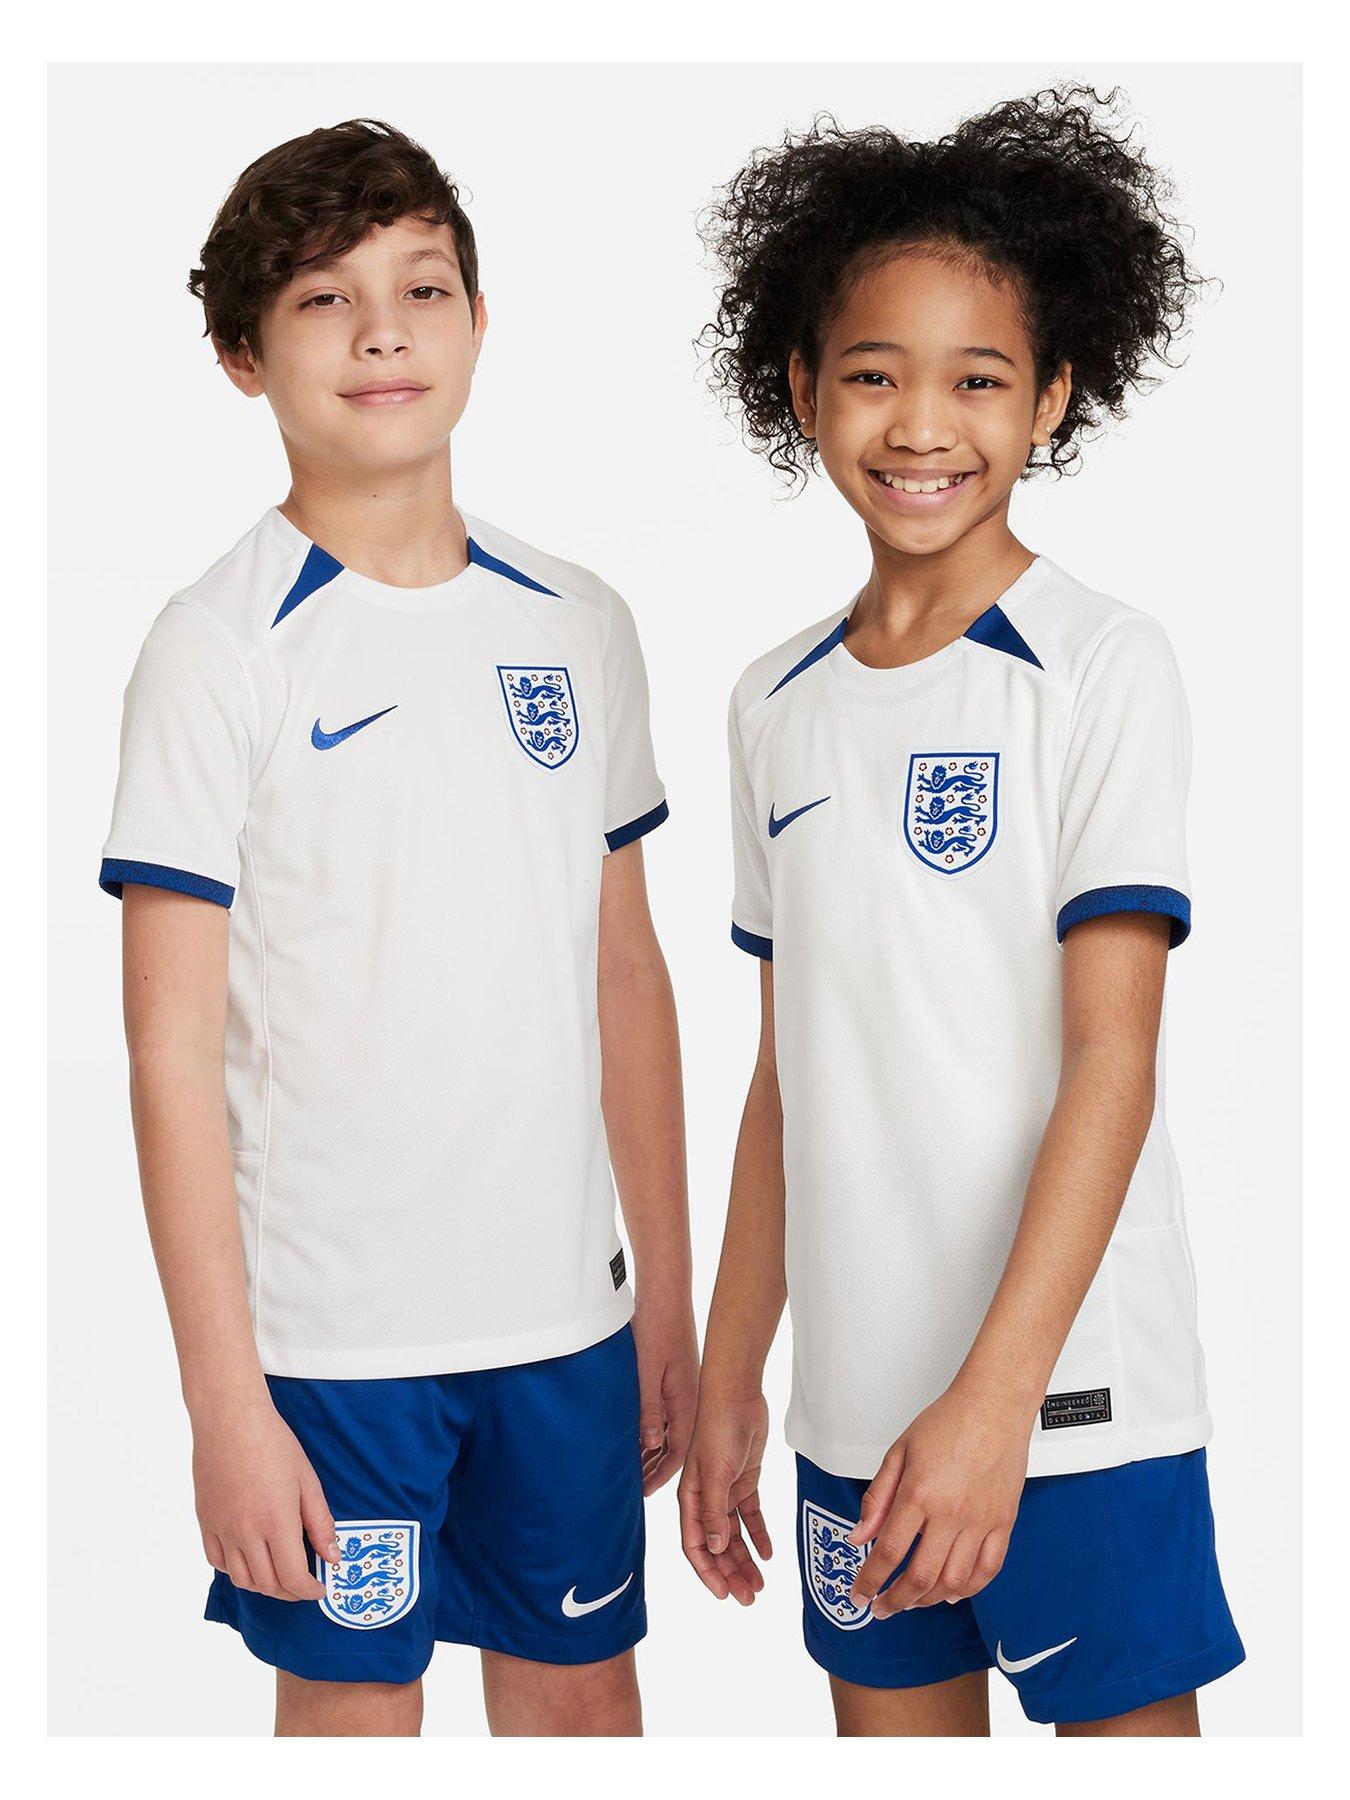 International Teams, Football shirts & kits, Kids & baby sports clothing, Sports & leisure